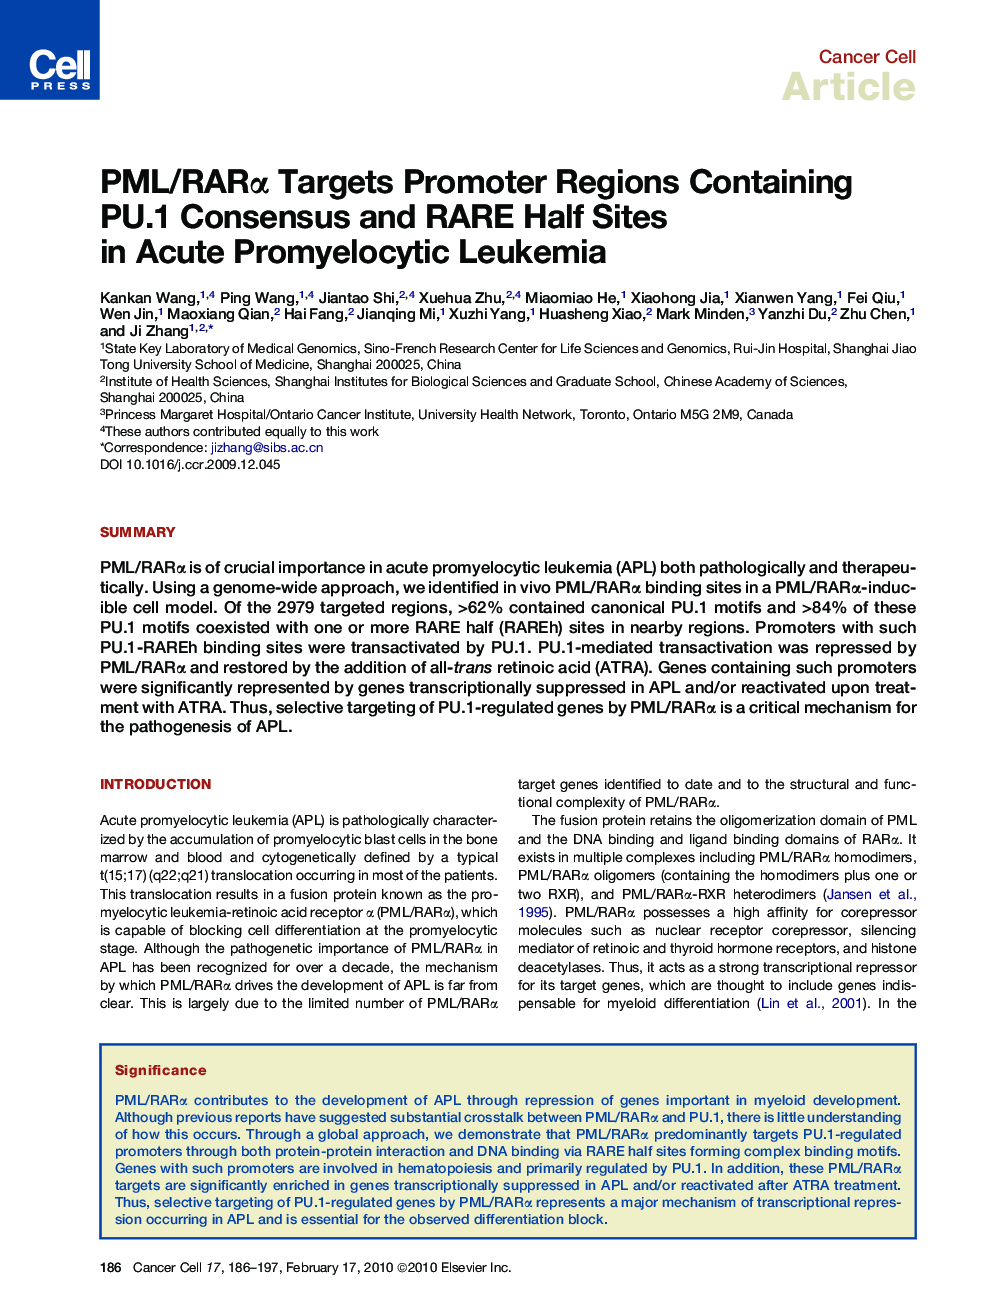 PML/RARα Targets Promoter Regions Containing PU.1 Consensus and RARE Half Sites in Acute Promyelocytic Leukemia